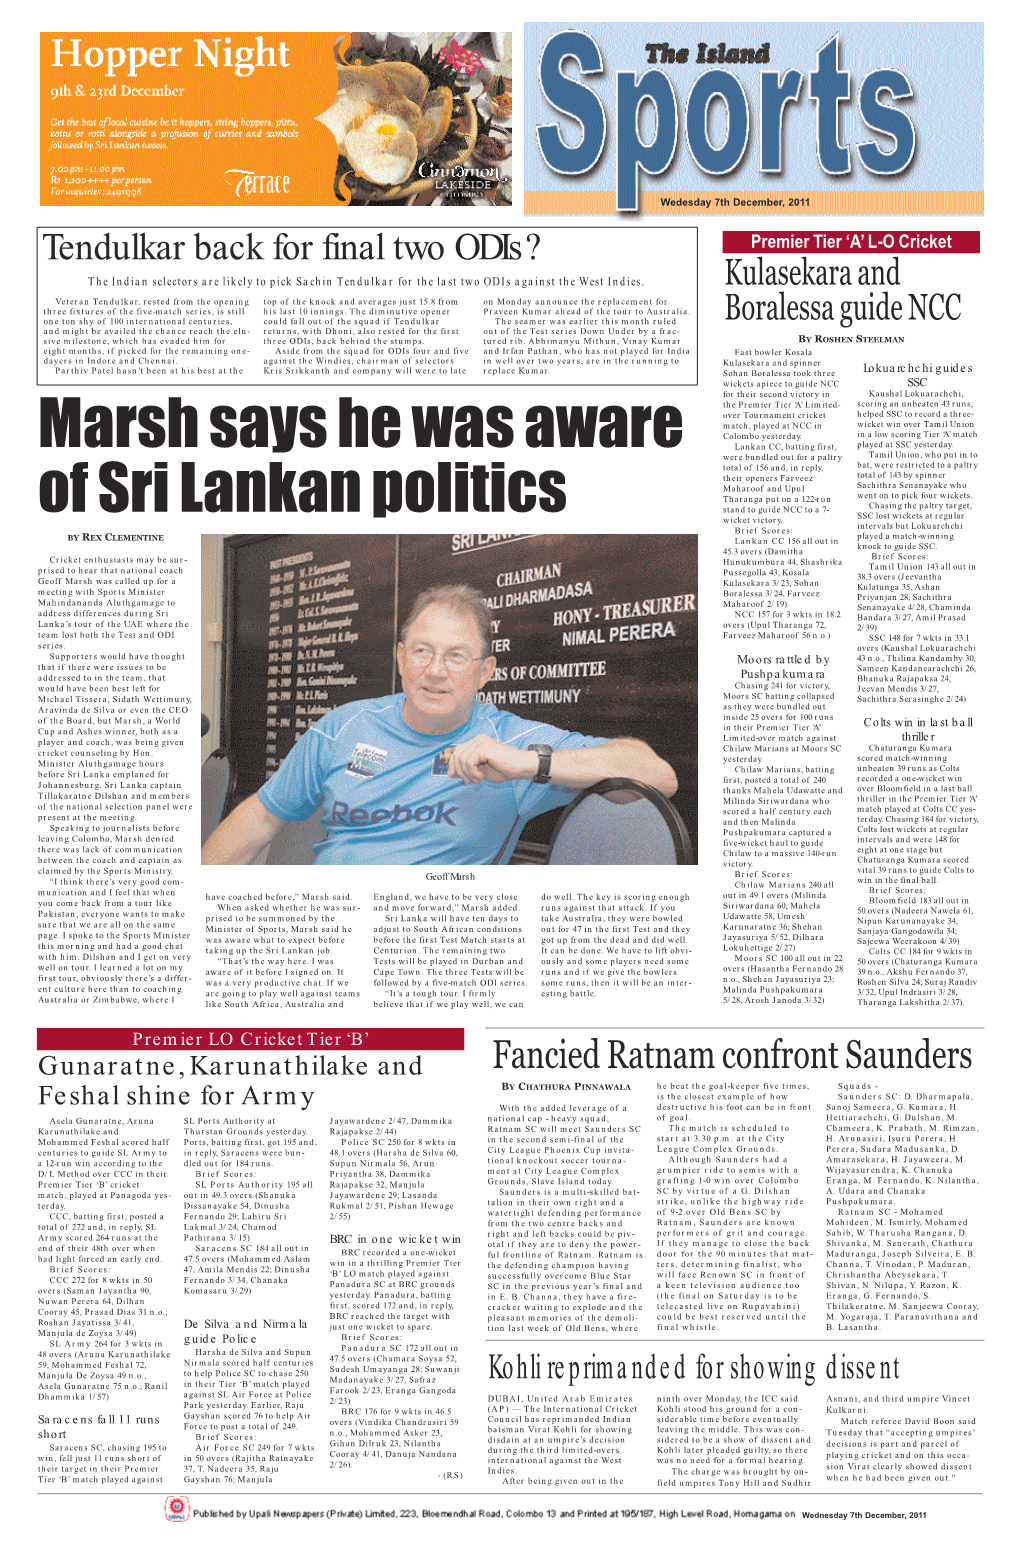 Marsh Says He Was Aware of Sri Lankan Politics